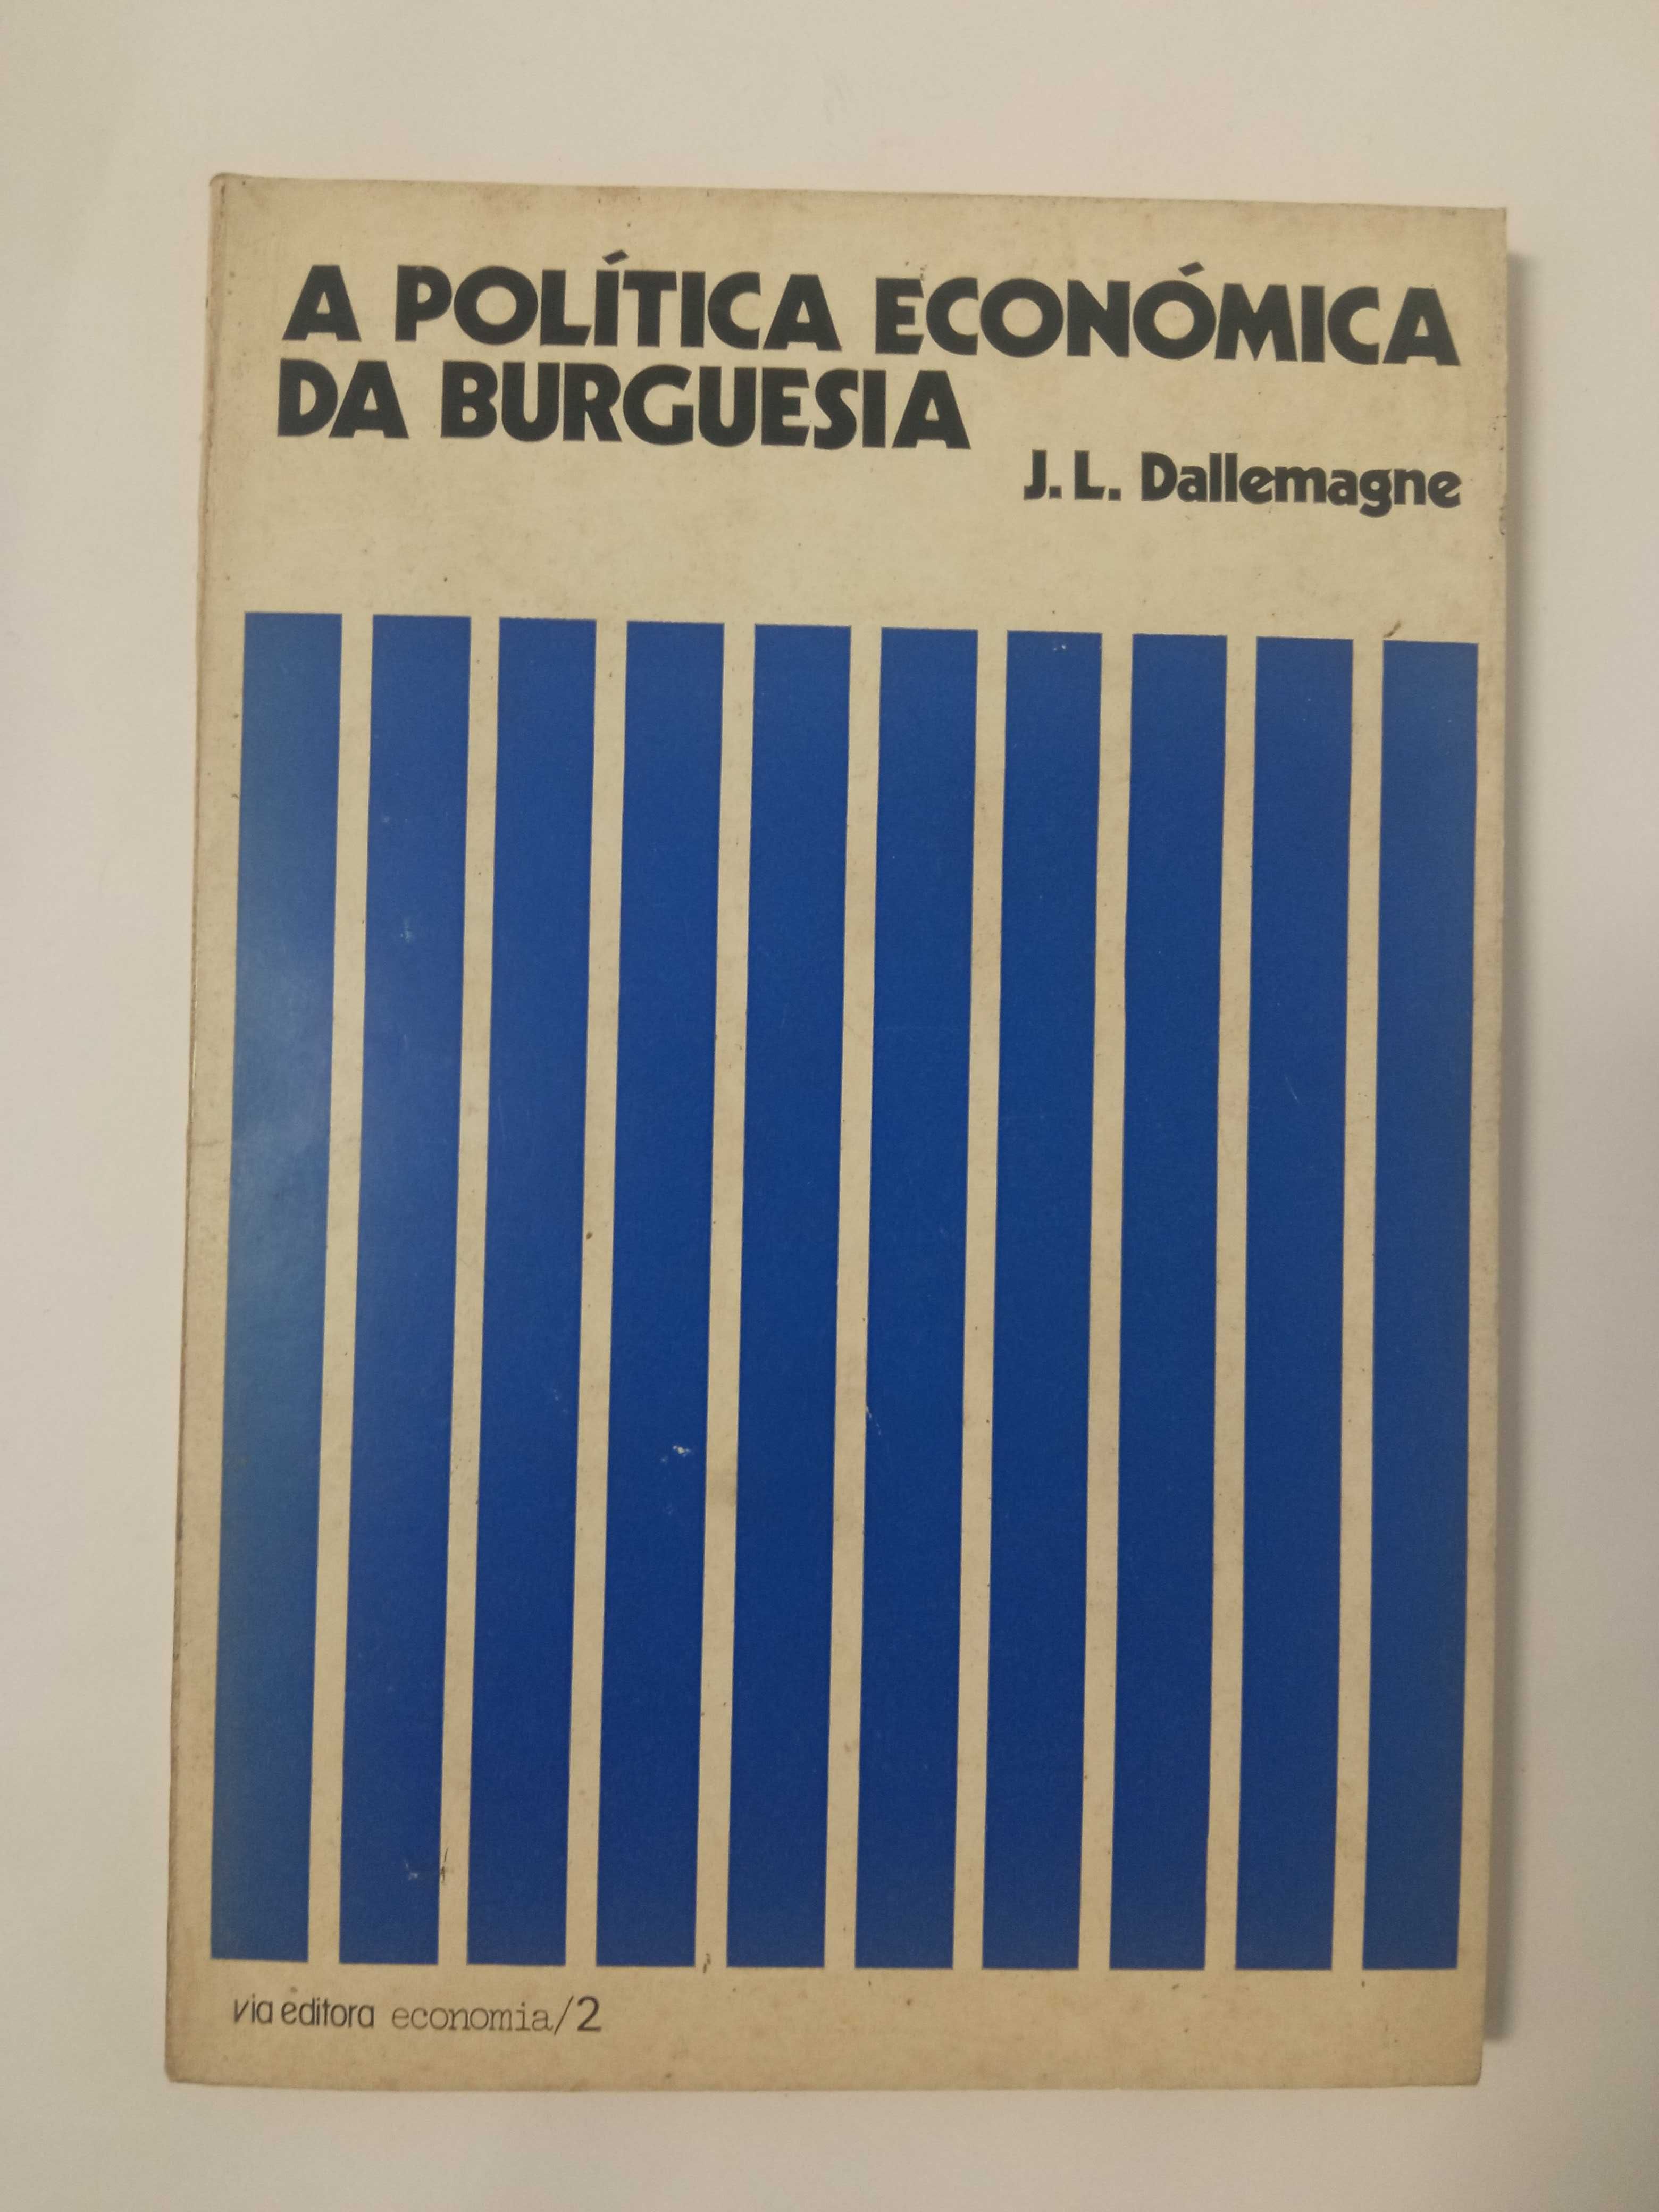 A política económica da Burguesia, de J. L. Dallemagne